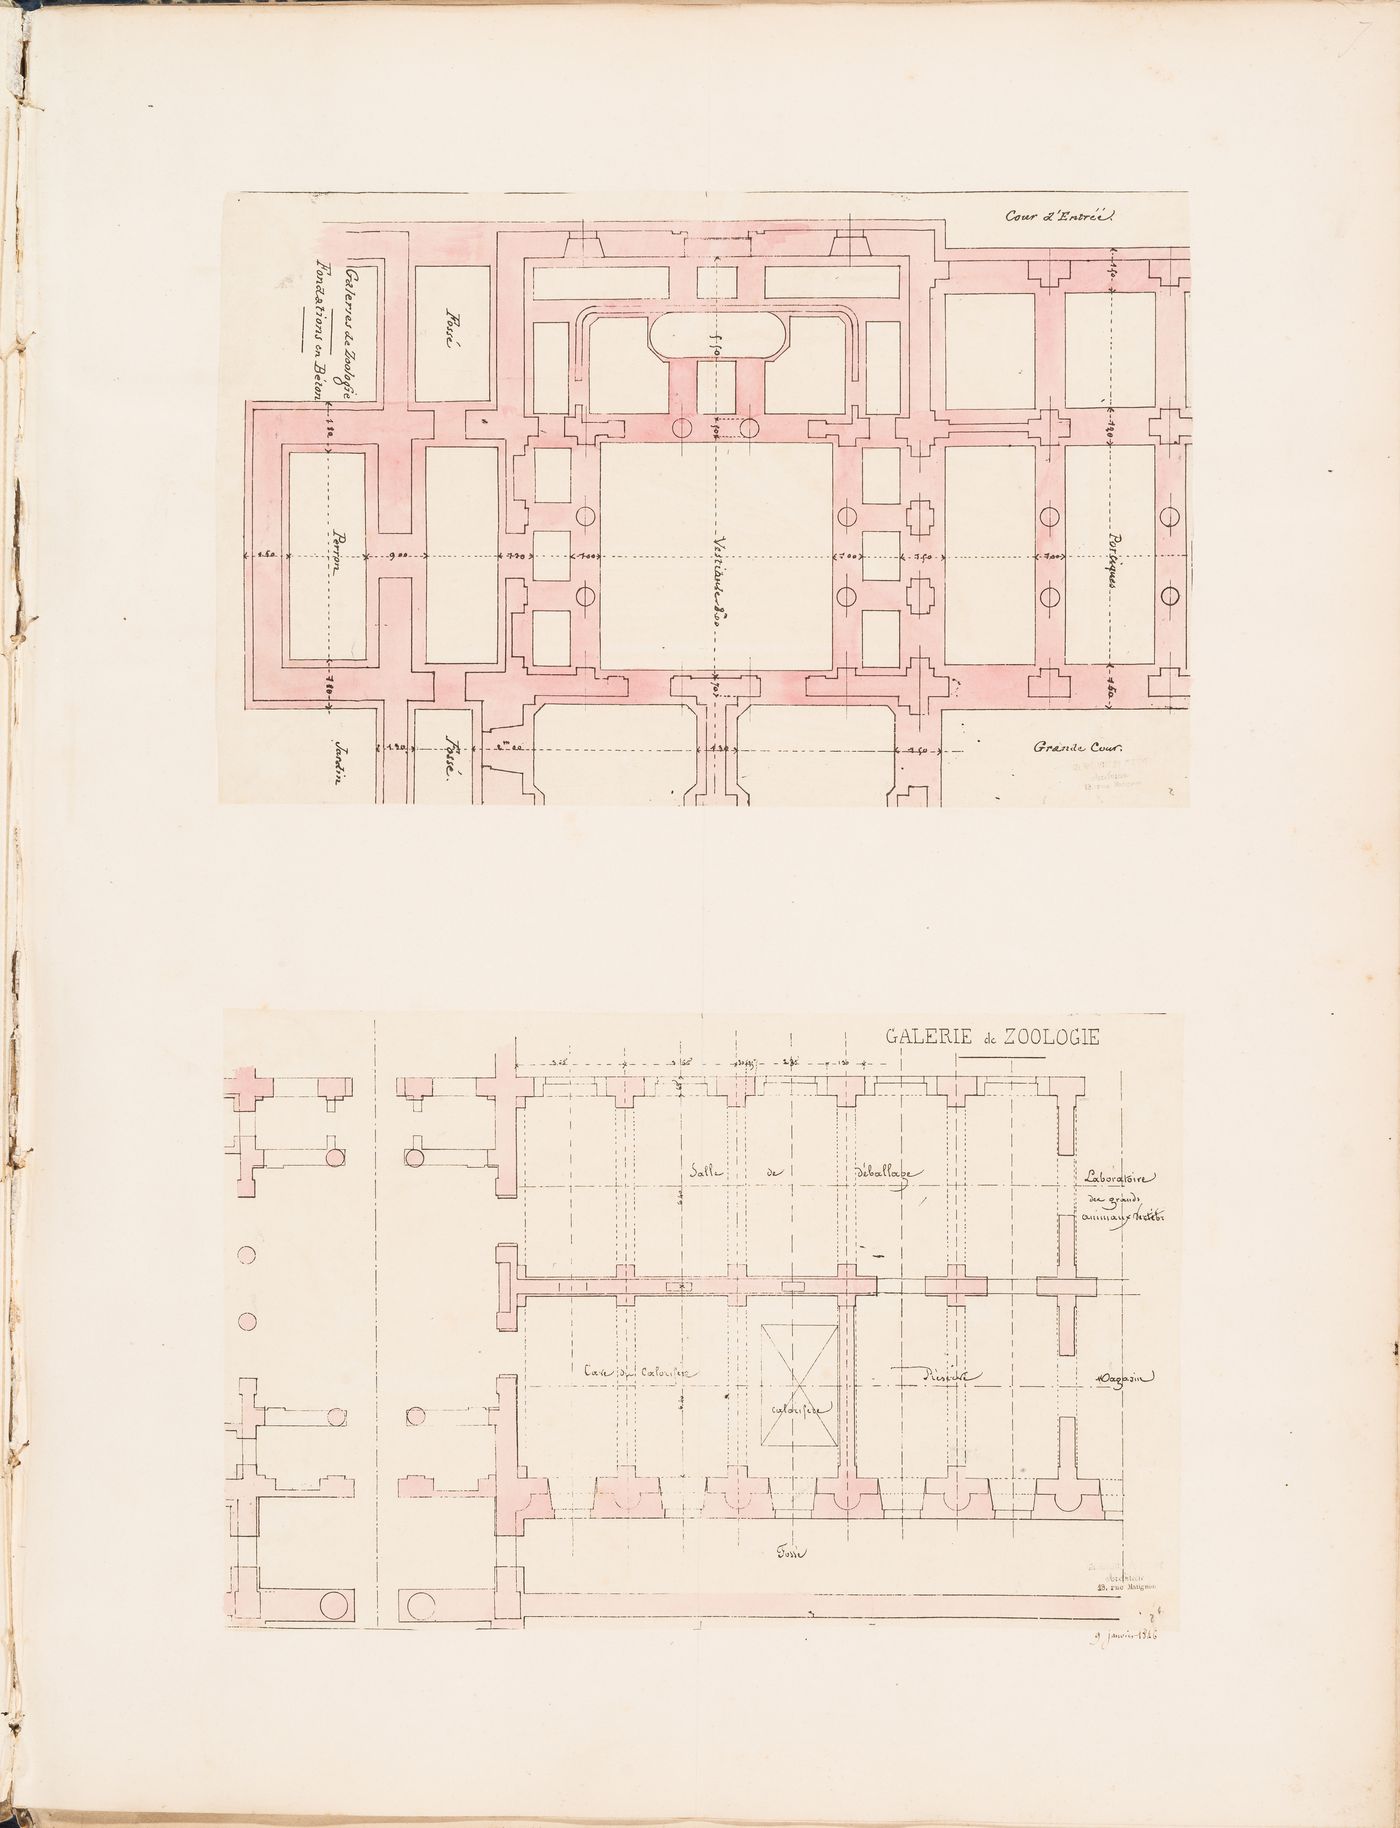 Project for a Galerie de zoologie, 1846: Partial foundation plan and partial plan for the "soubassement"